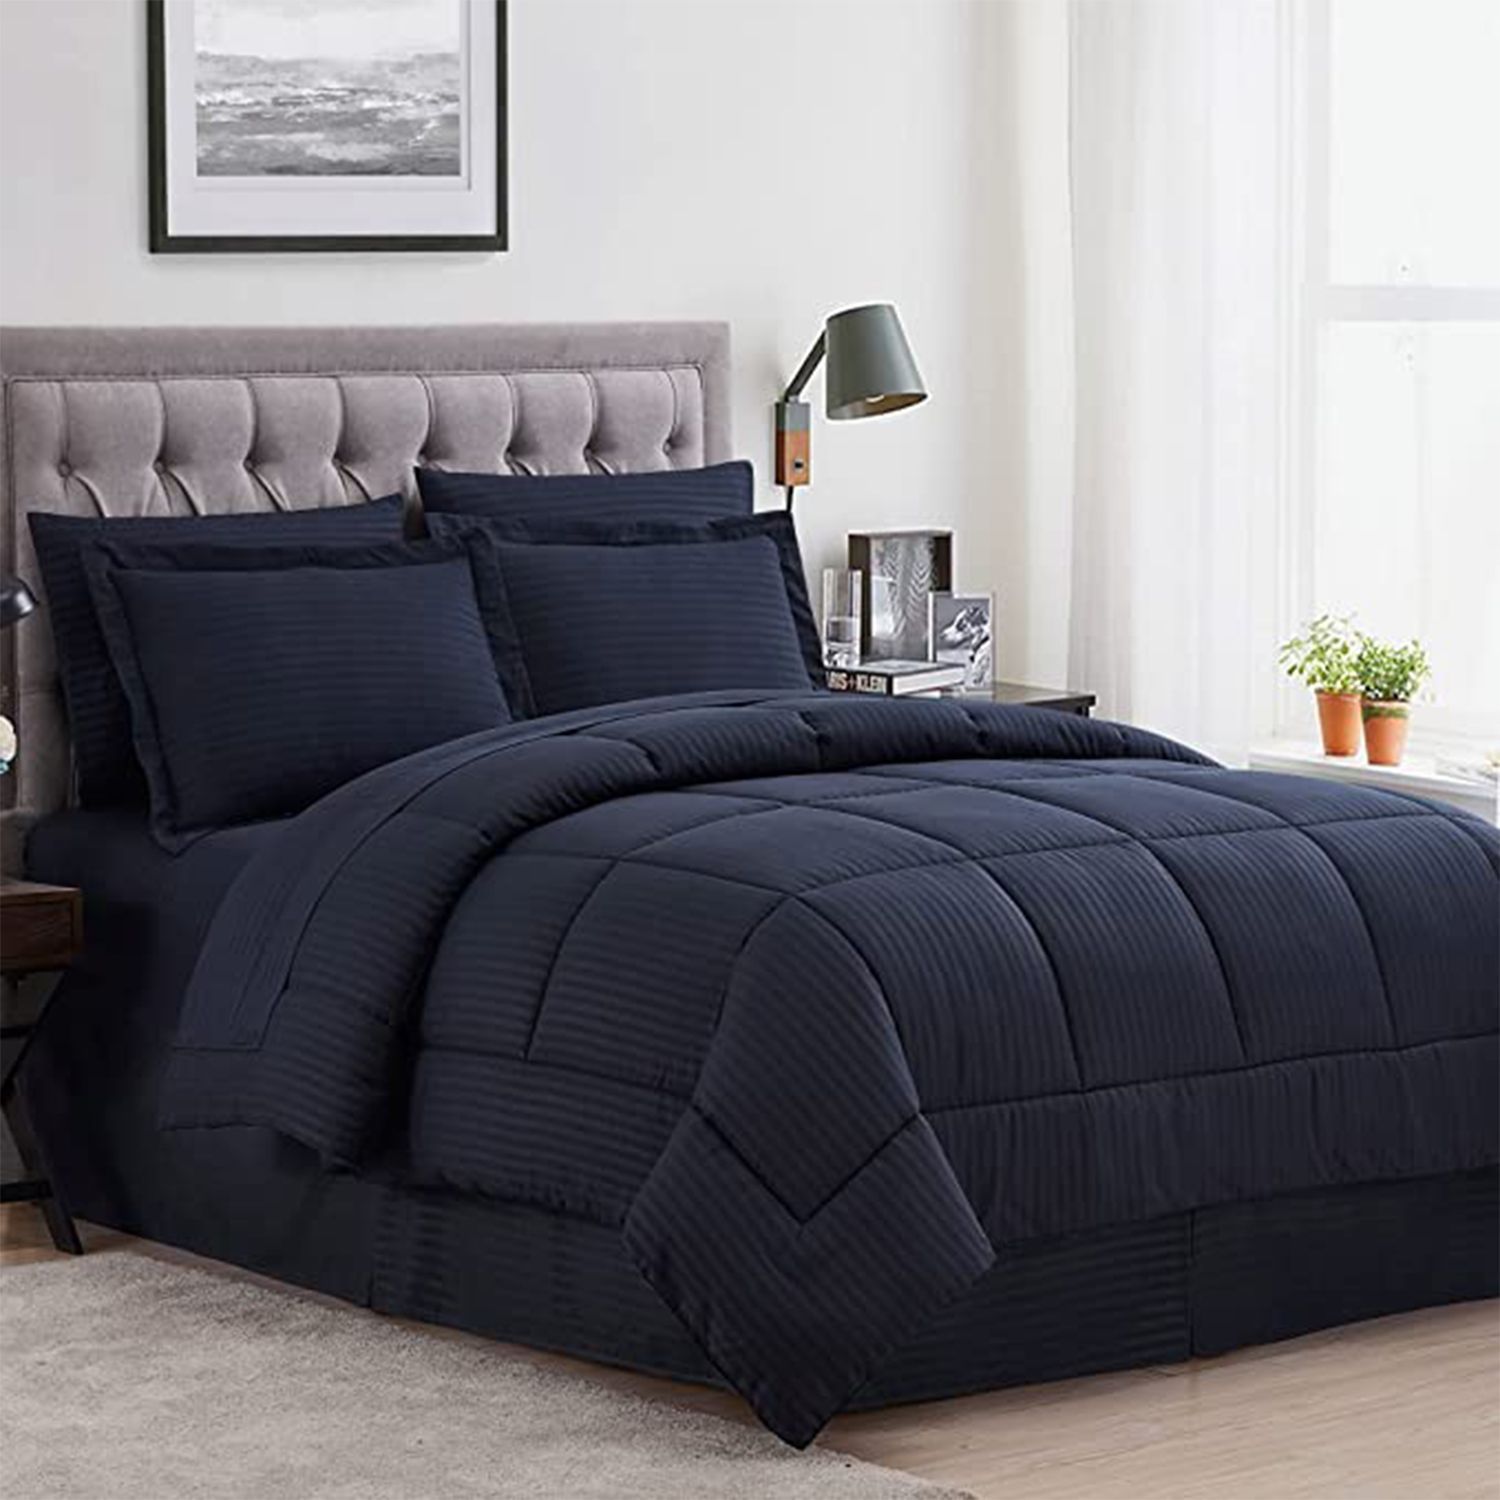 Twin XL Dorm Bedding Set 5 Piece Bed In A Bag Comforter Set 